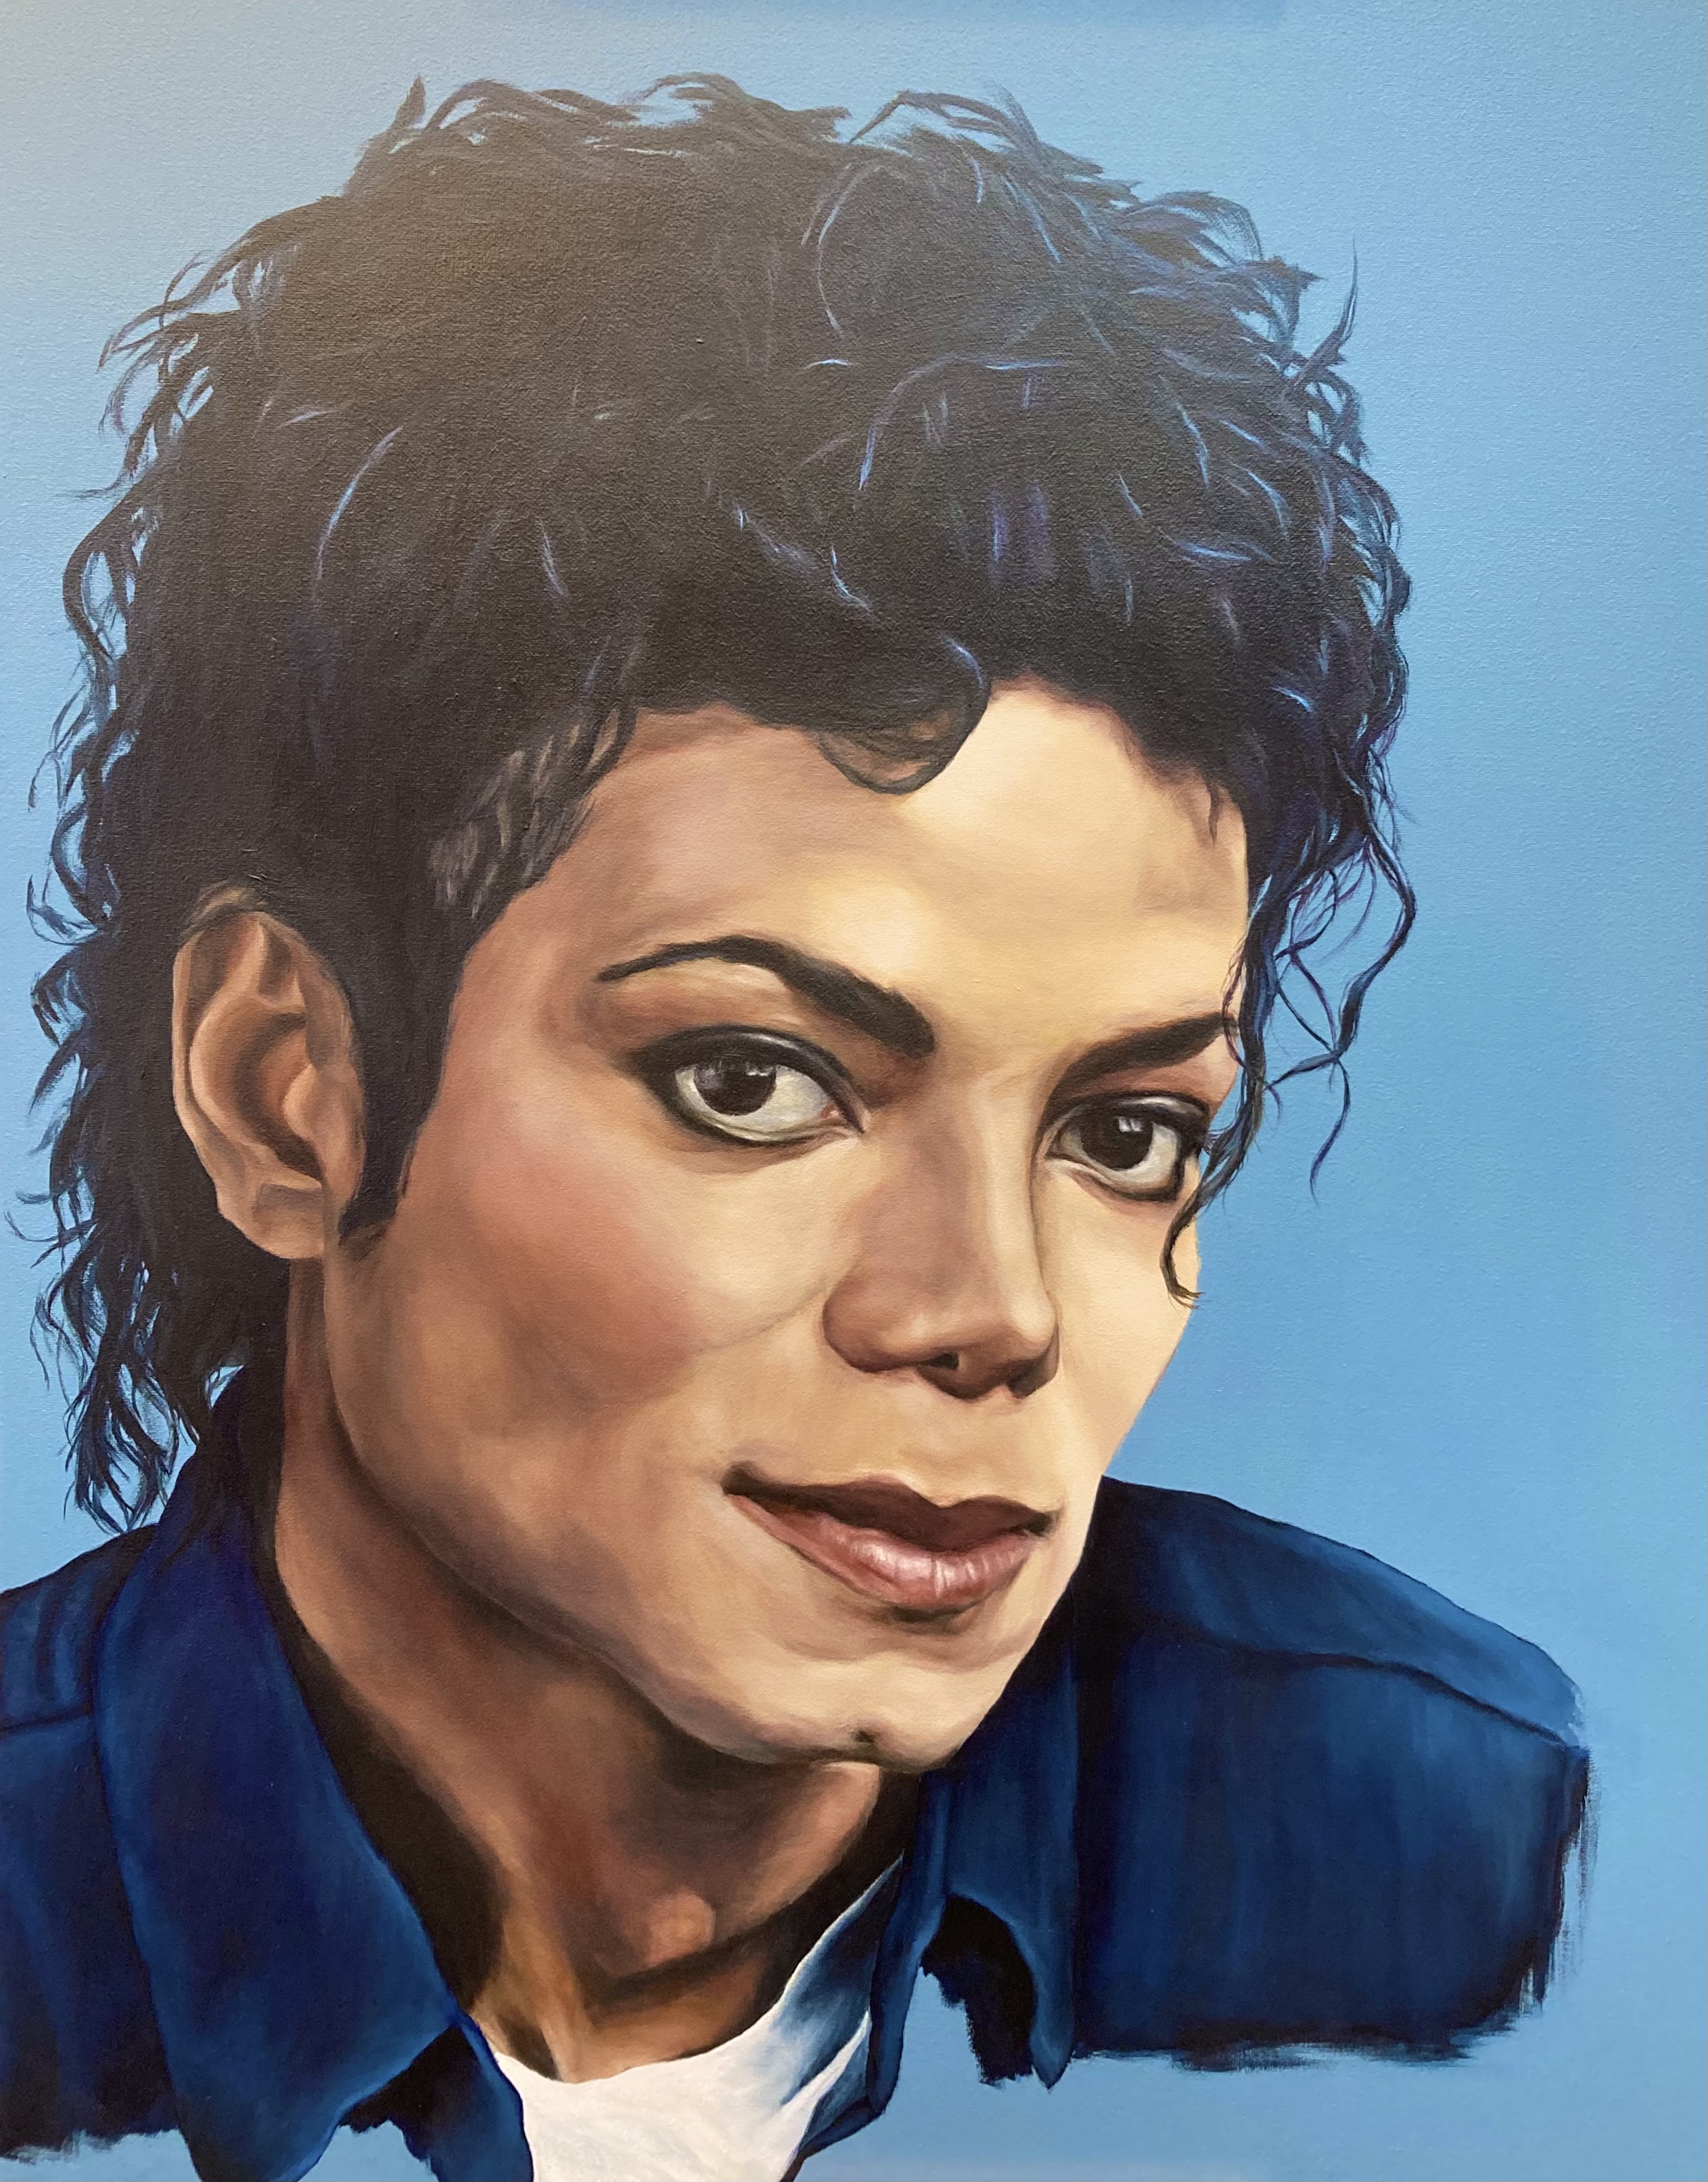 ‘A legend called Michael’